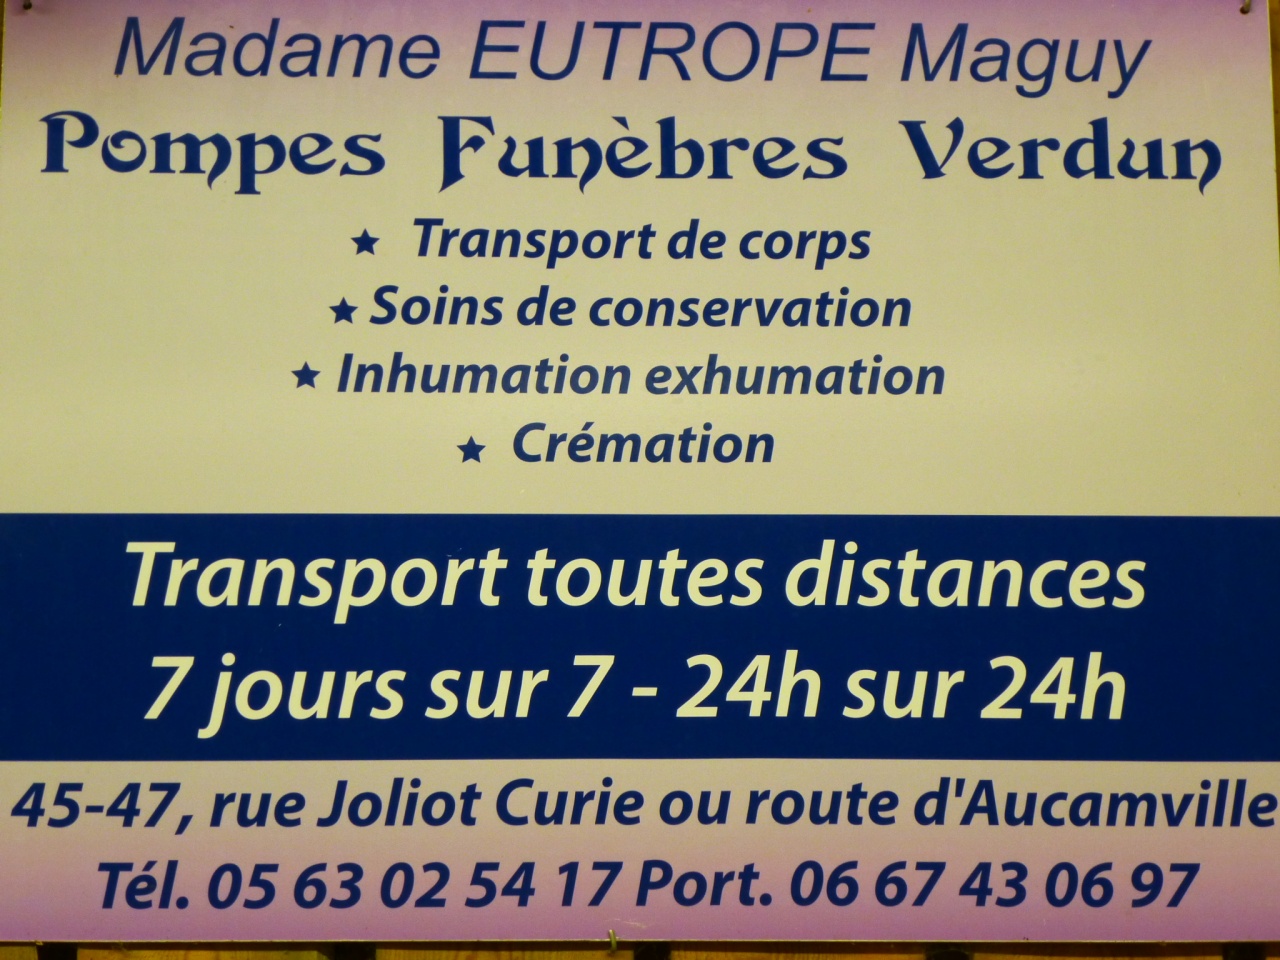 Madame EUTROPE Maguy